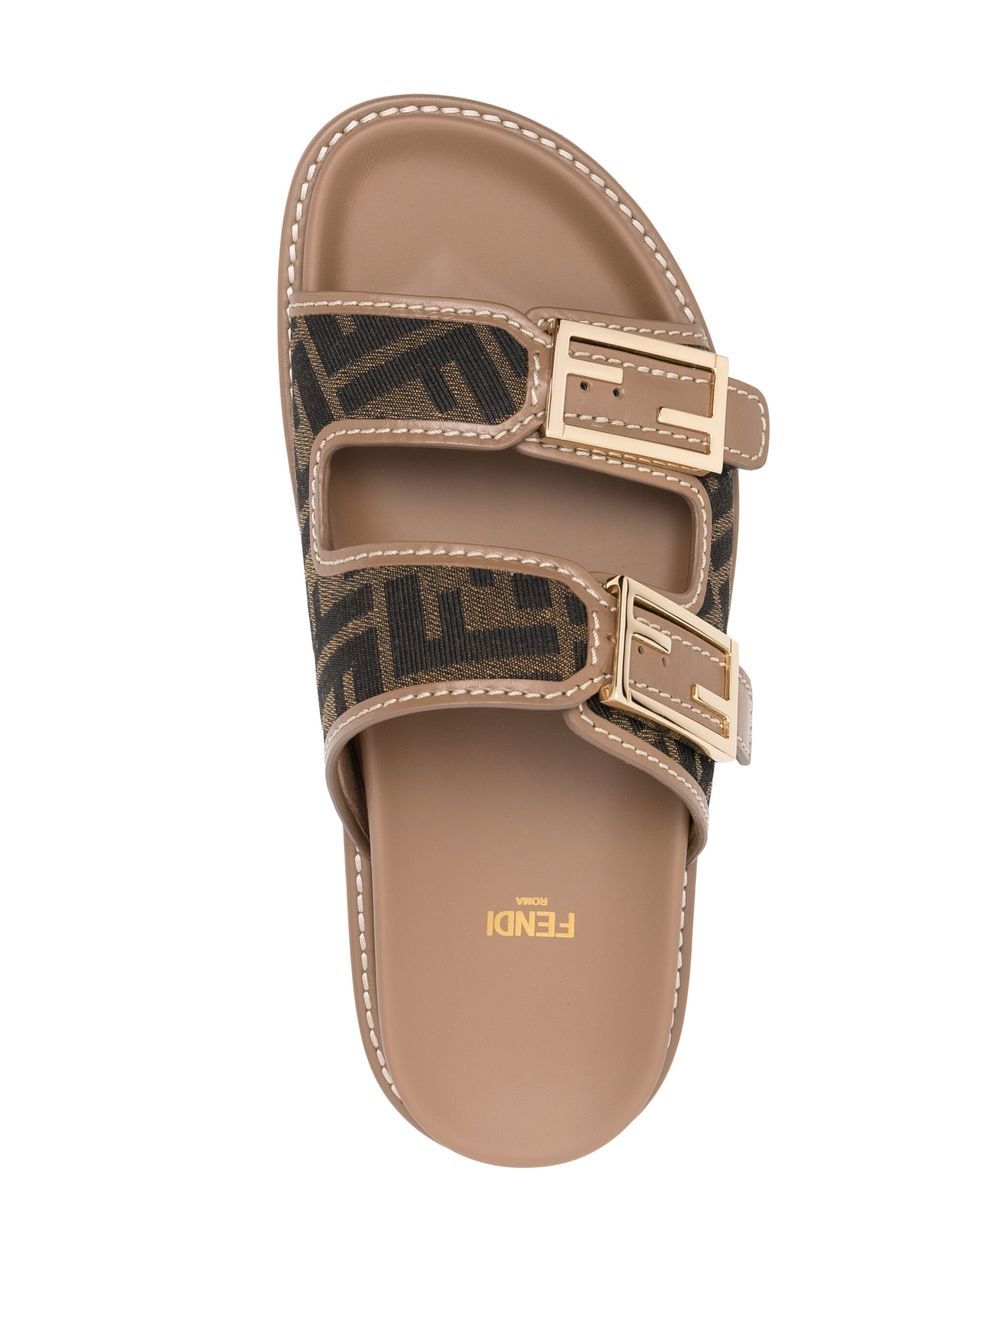 Fendi Feels Leather Slide Sandals for Women in Brown